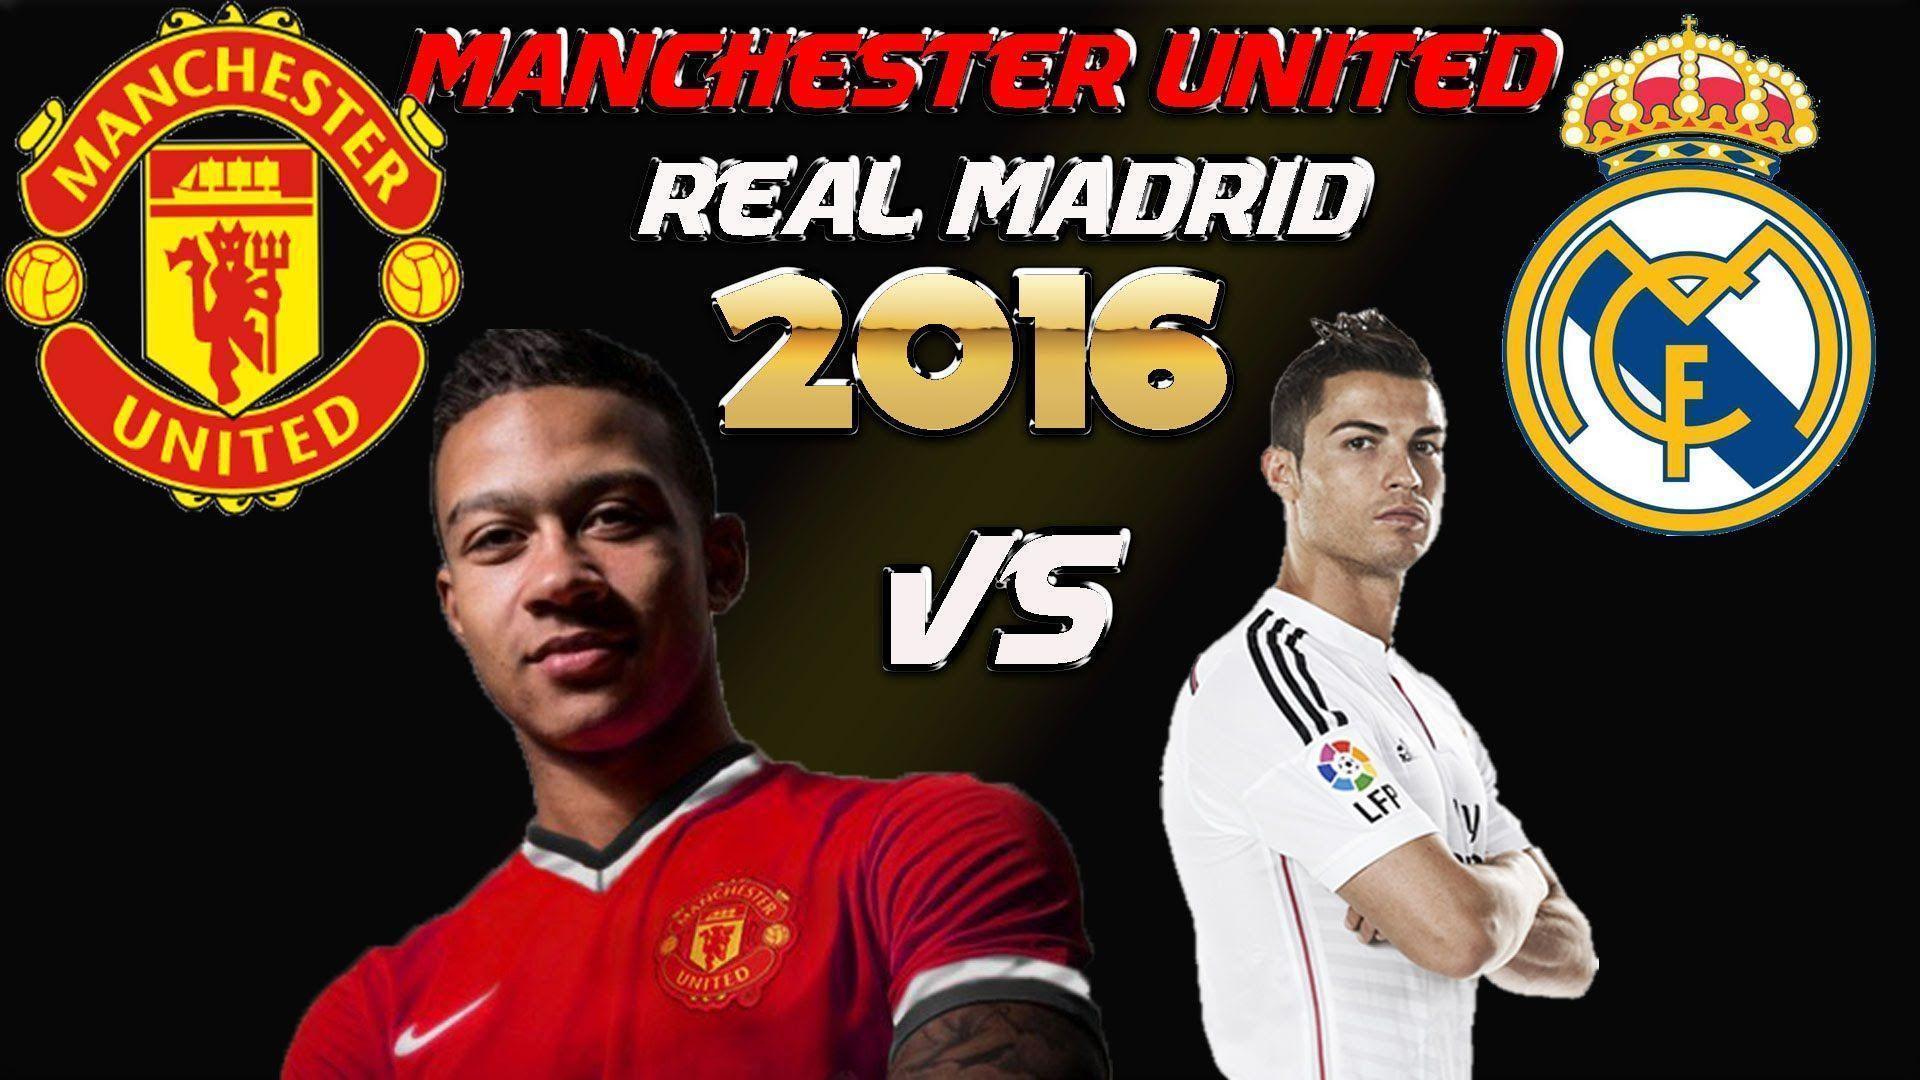 MANCHESTER UNITED 2016 vs REAL MADRID 2016. FIFA 15 Simulation